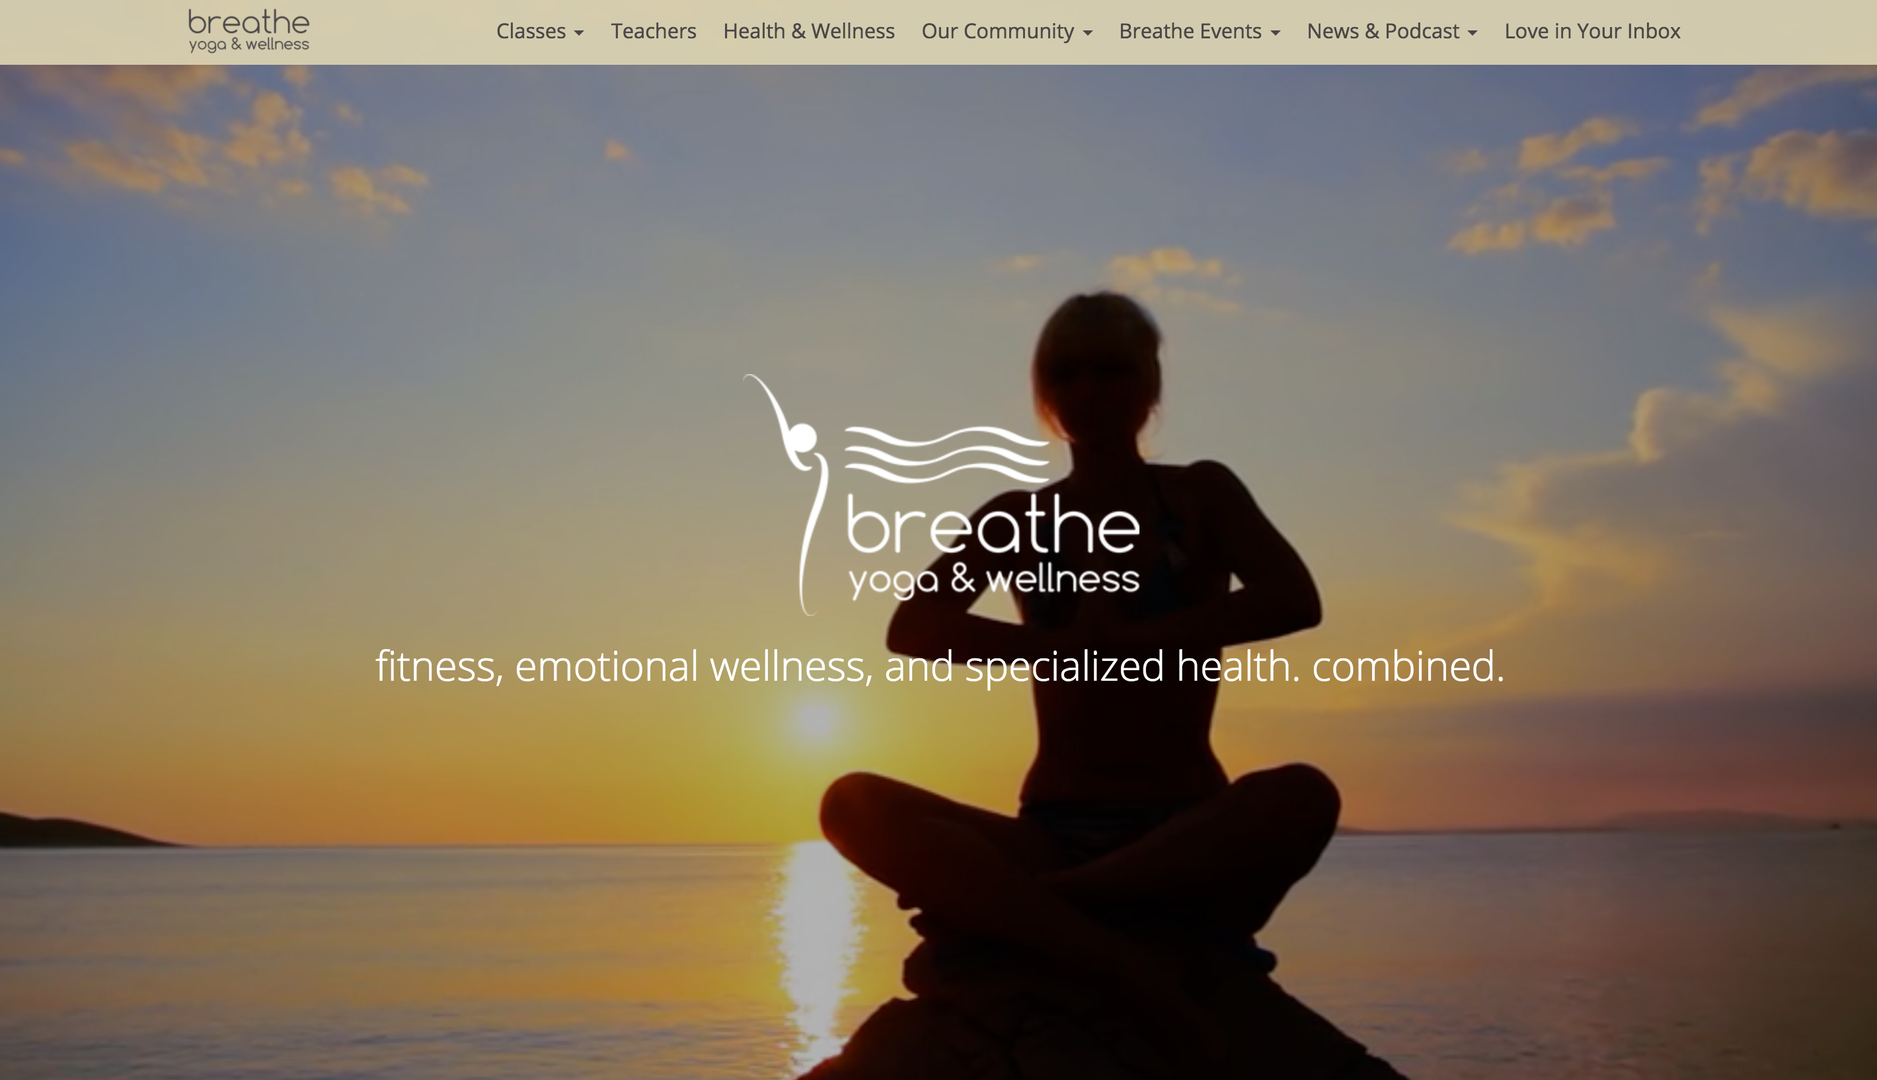 Breathe Yoga Wellness website homepage